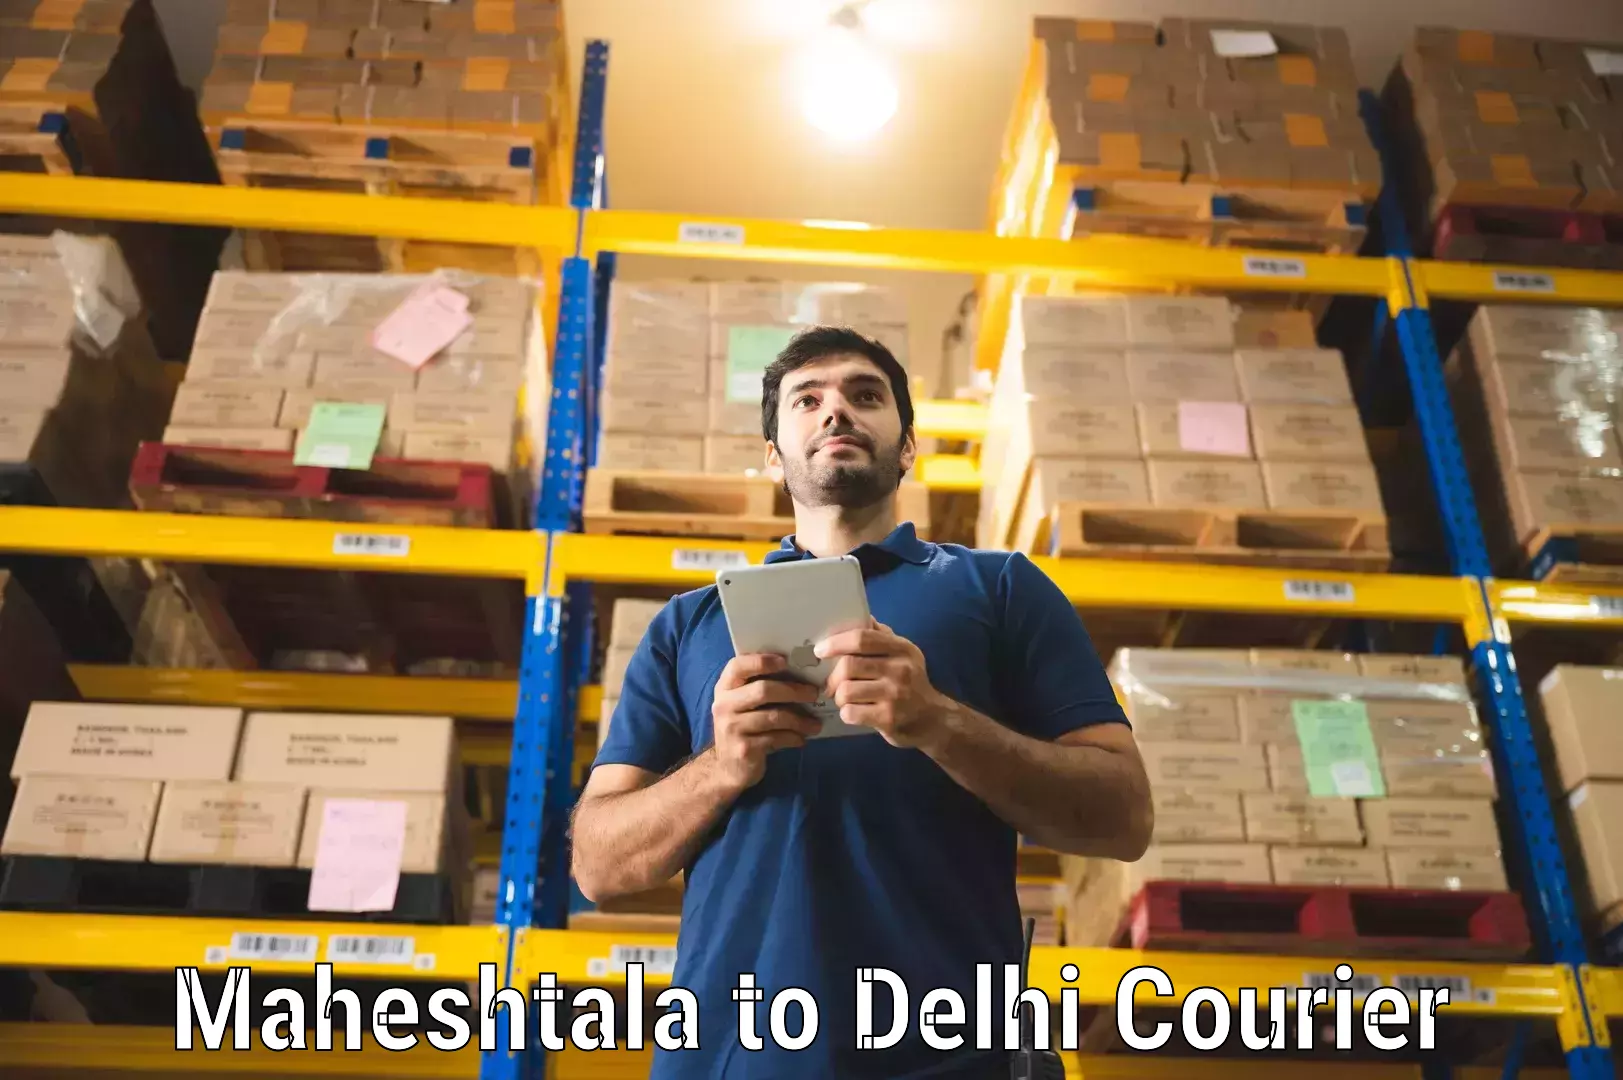 User-friendly delivery service Maheshtala to Delhi